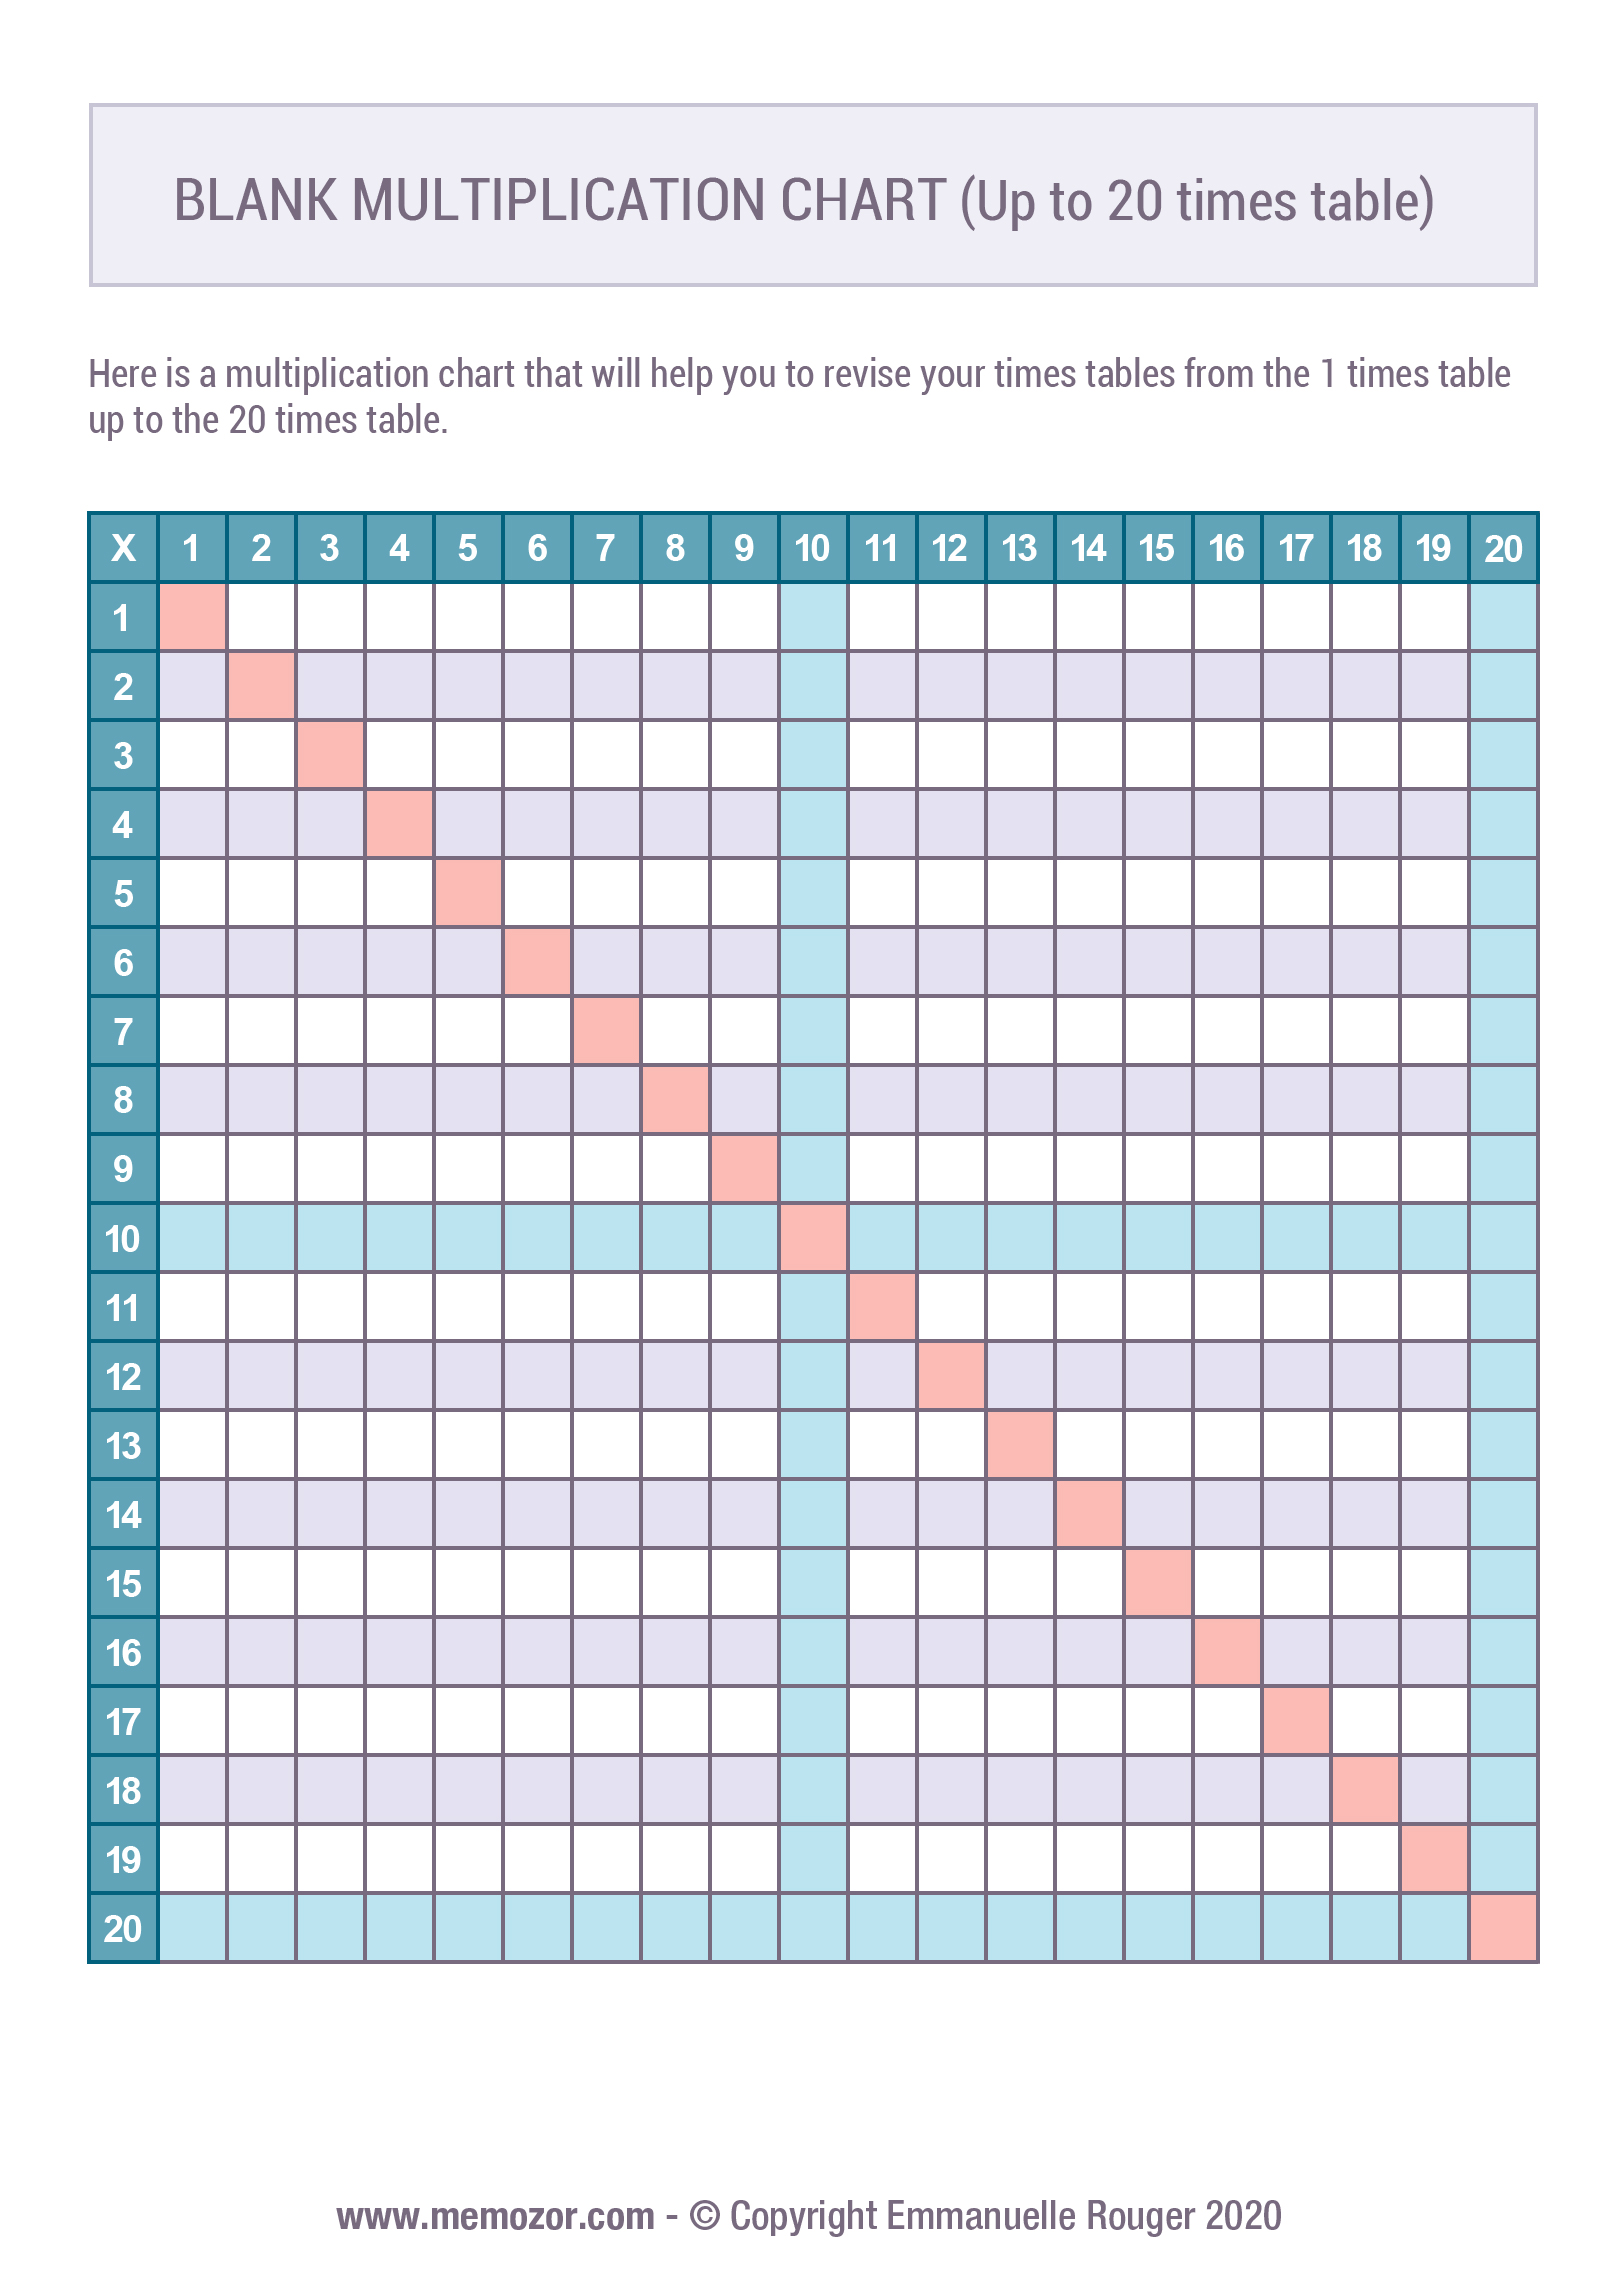 printable-blank-multiplication-chart-color-1-20-free-memozor